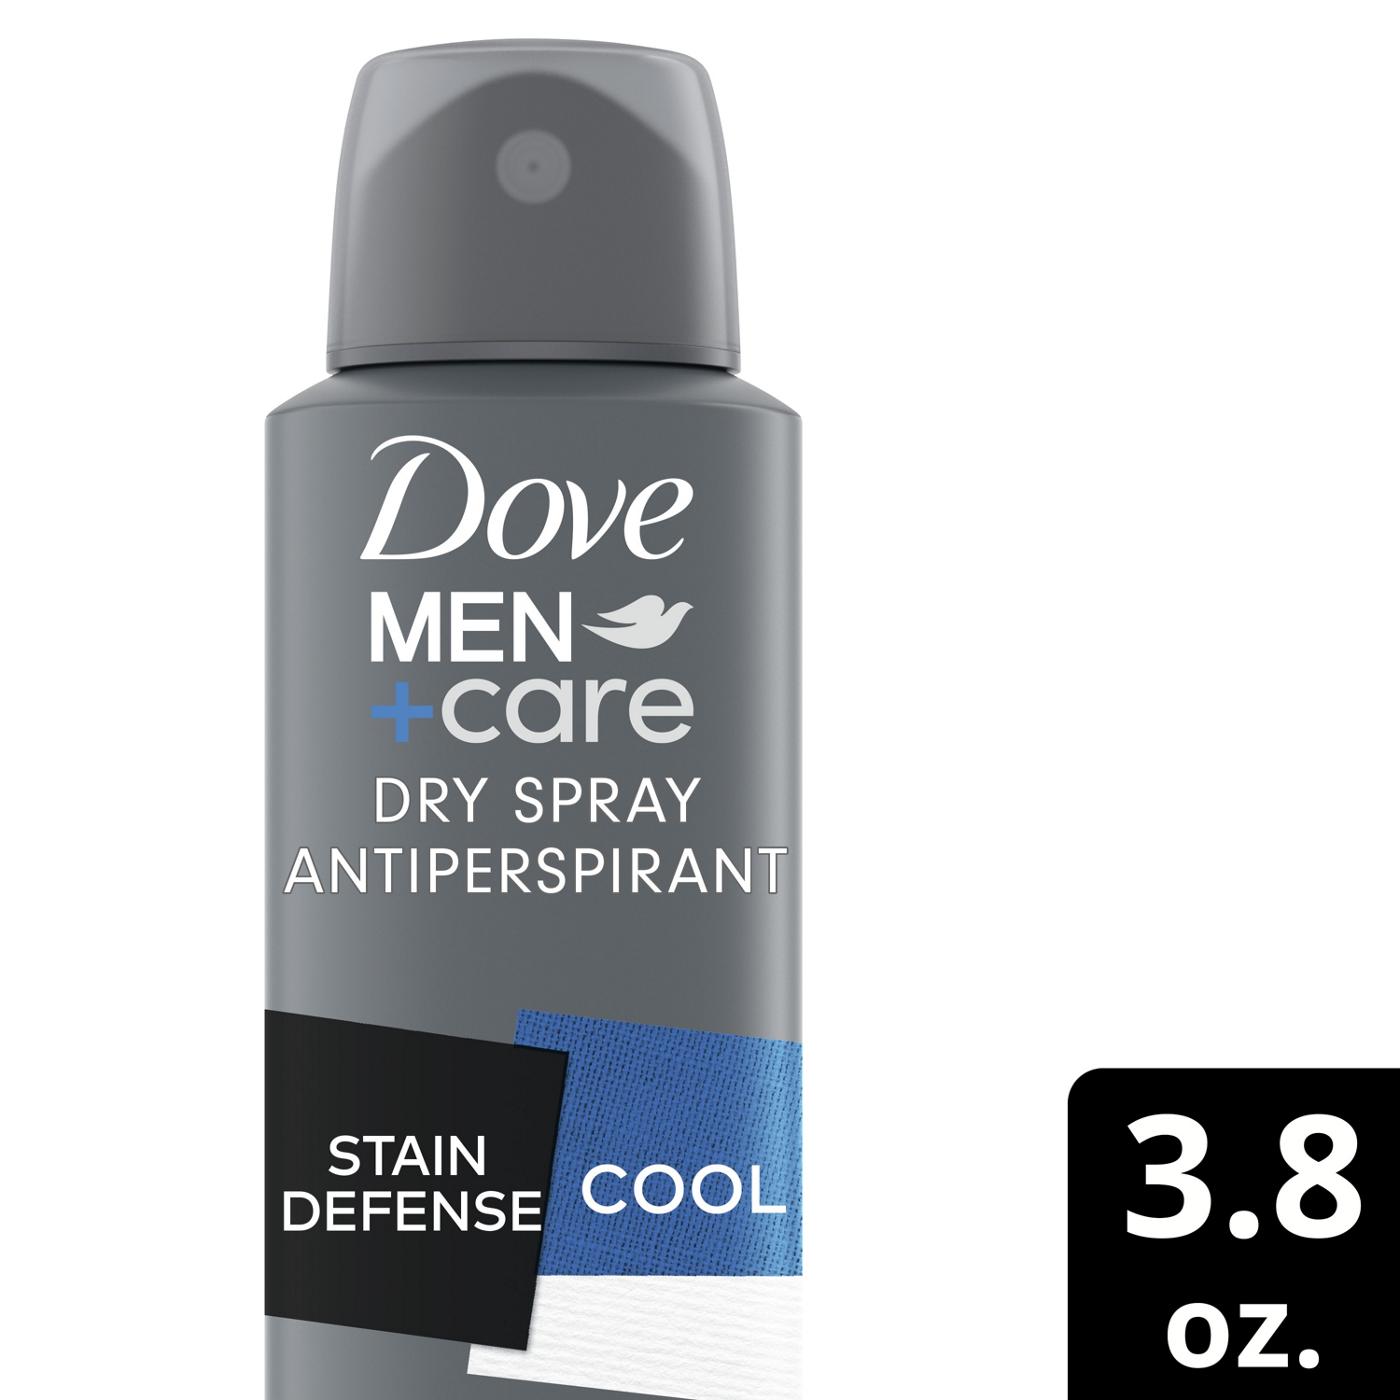 Dove Men+Care Antiperspirant Deodorant Stain Defense - Cool; image 7 of 8